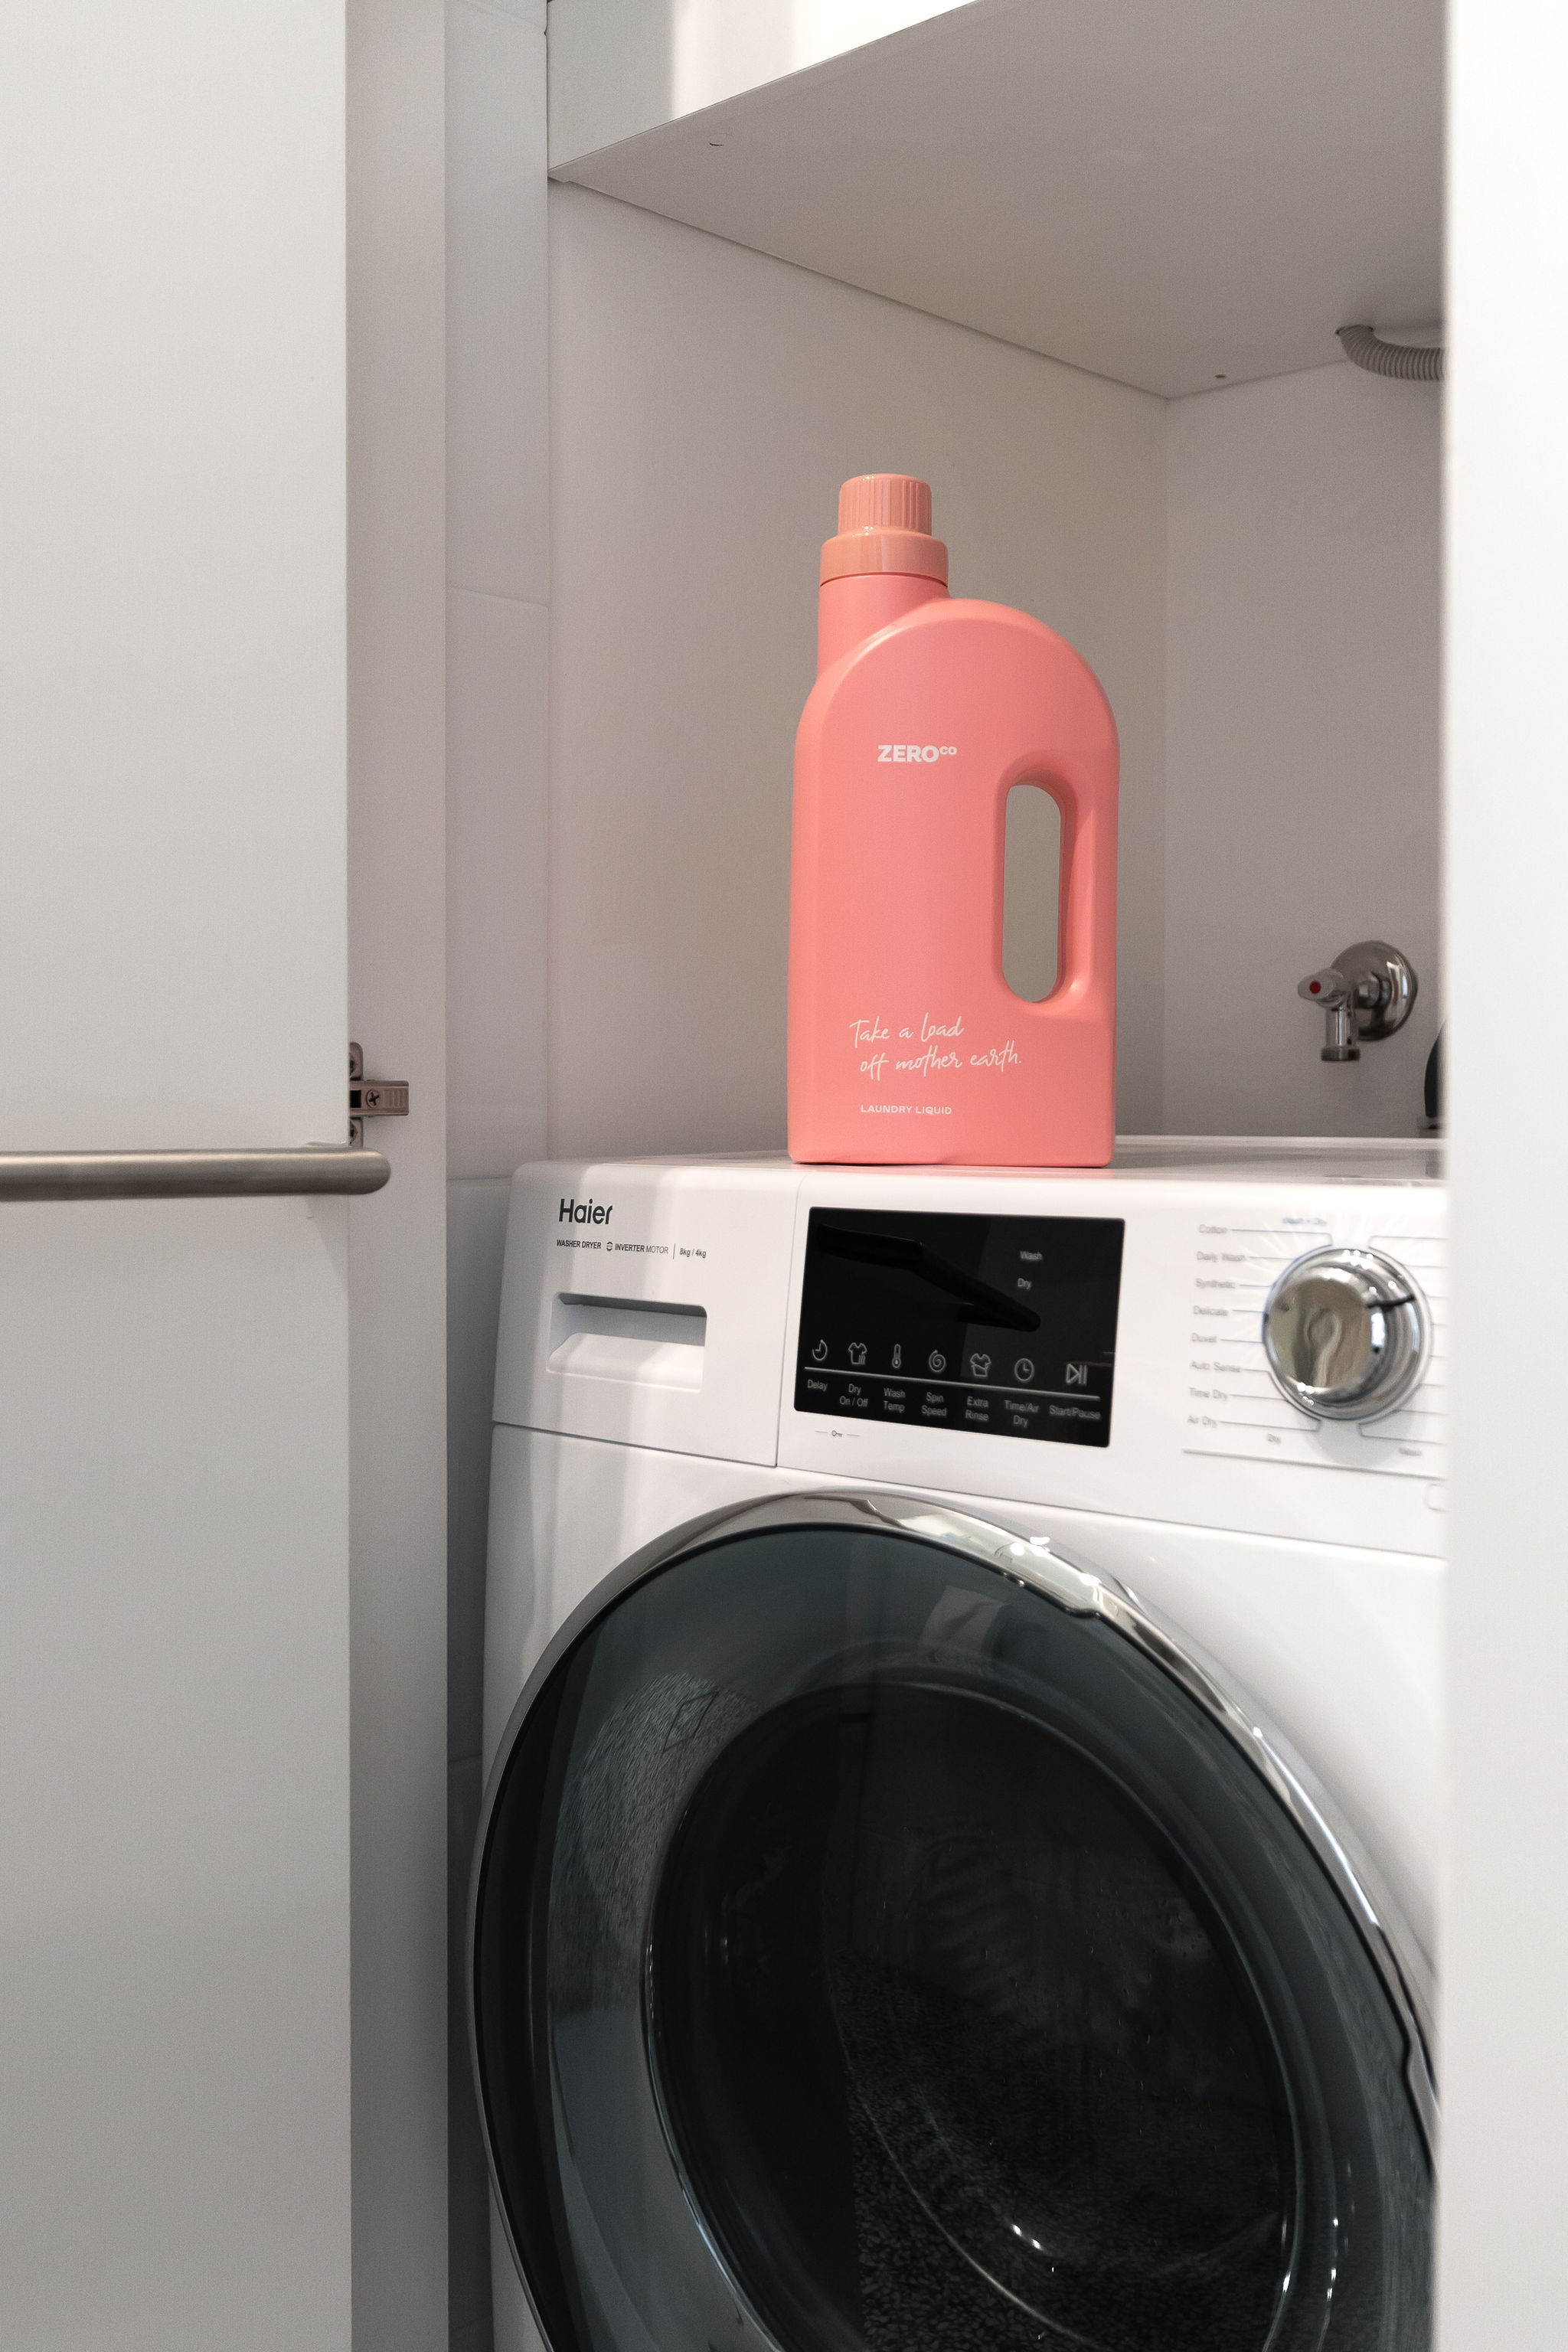 Laundry - One Bedroom Apartment - Urban Rest - Mulwarree Ave Apartments - Sydney